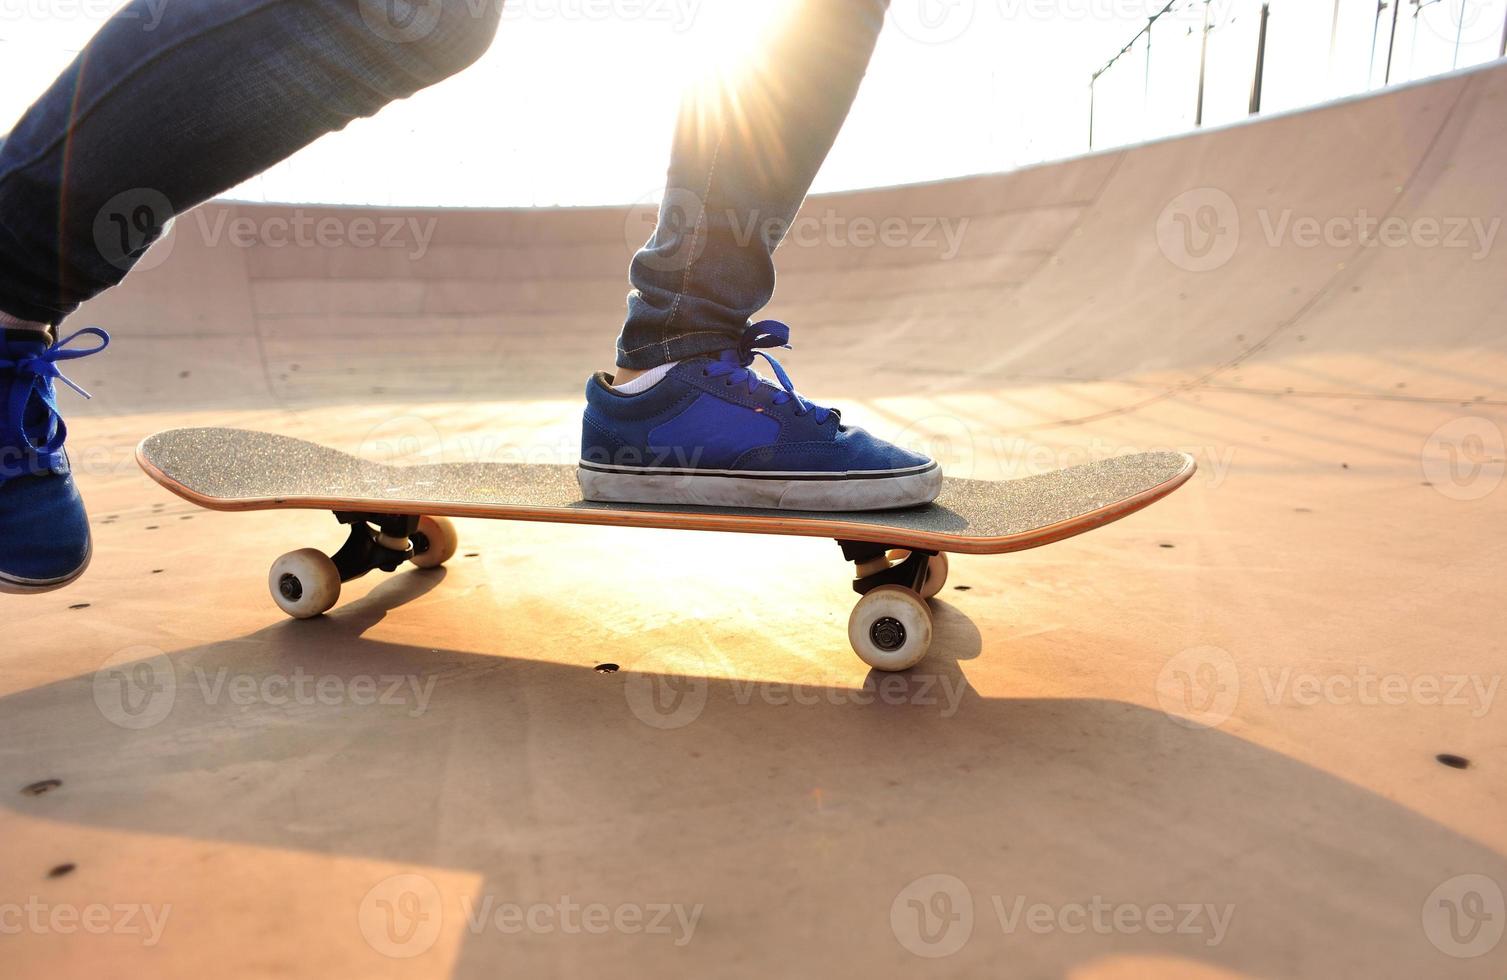 skateboarder at skatepark photo